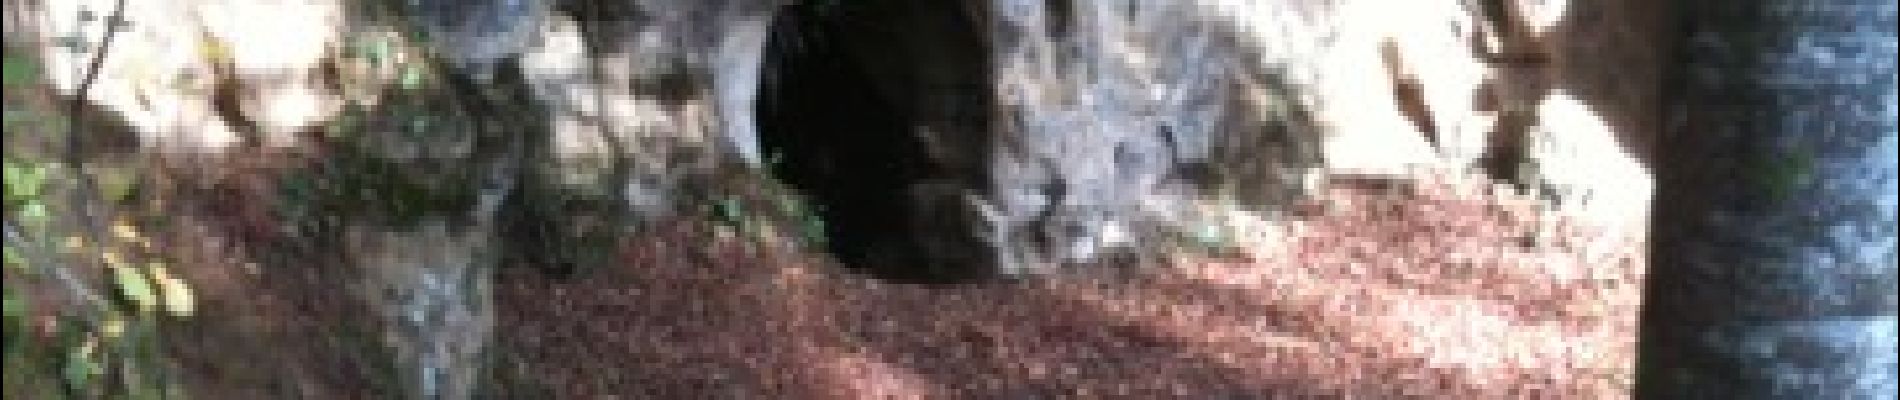 POI Virton - grotte de montourdon - Photo